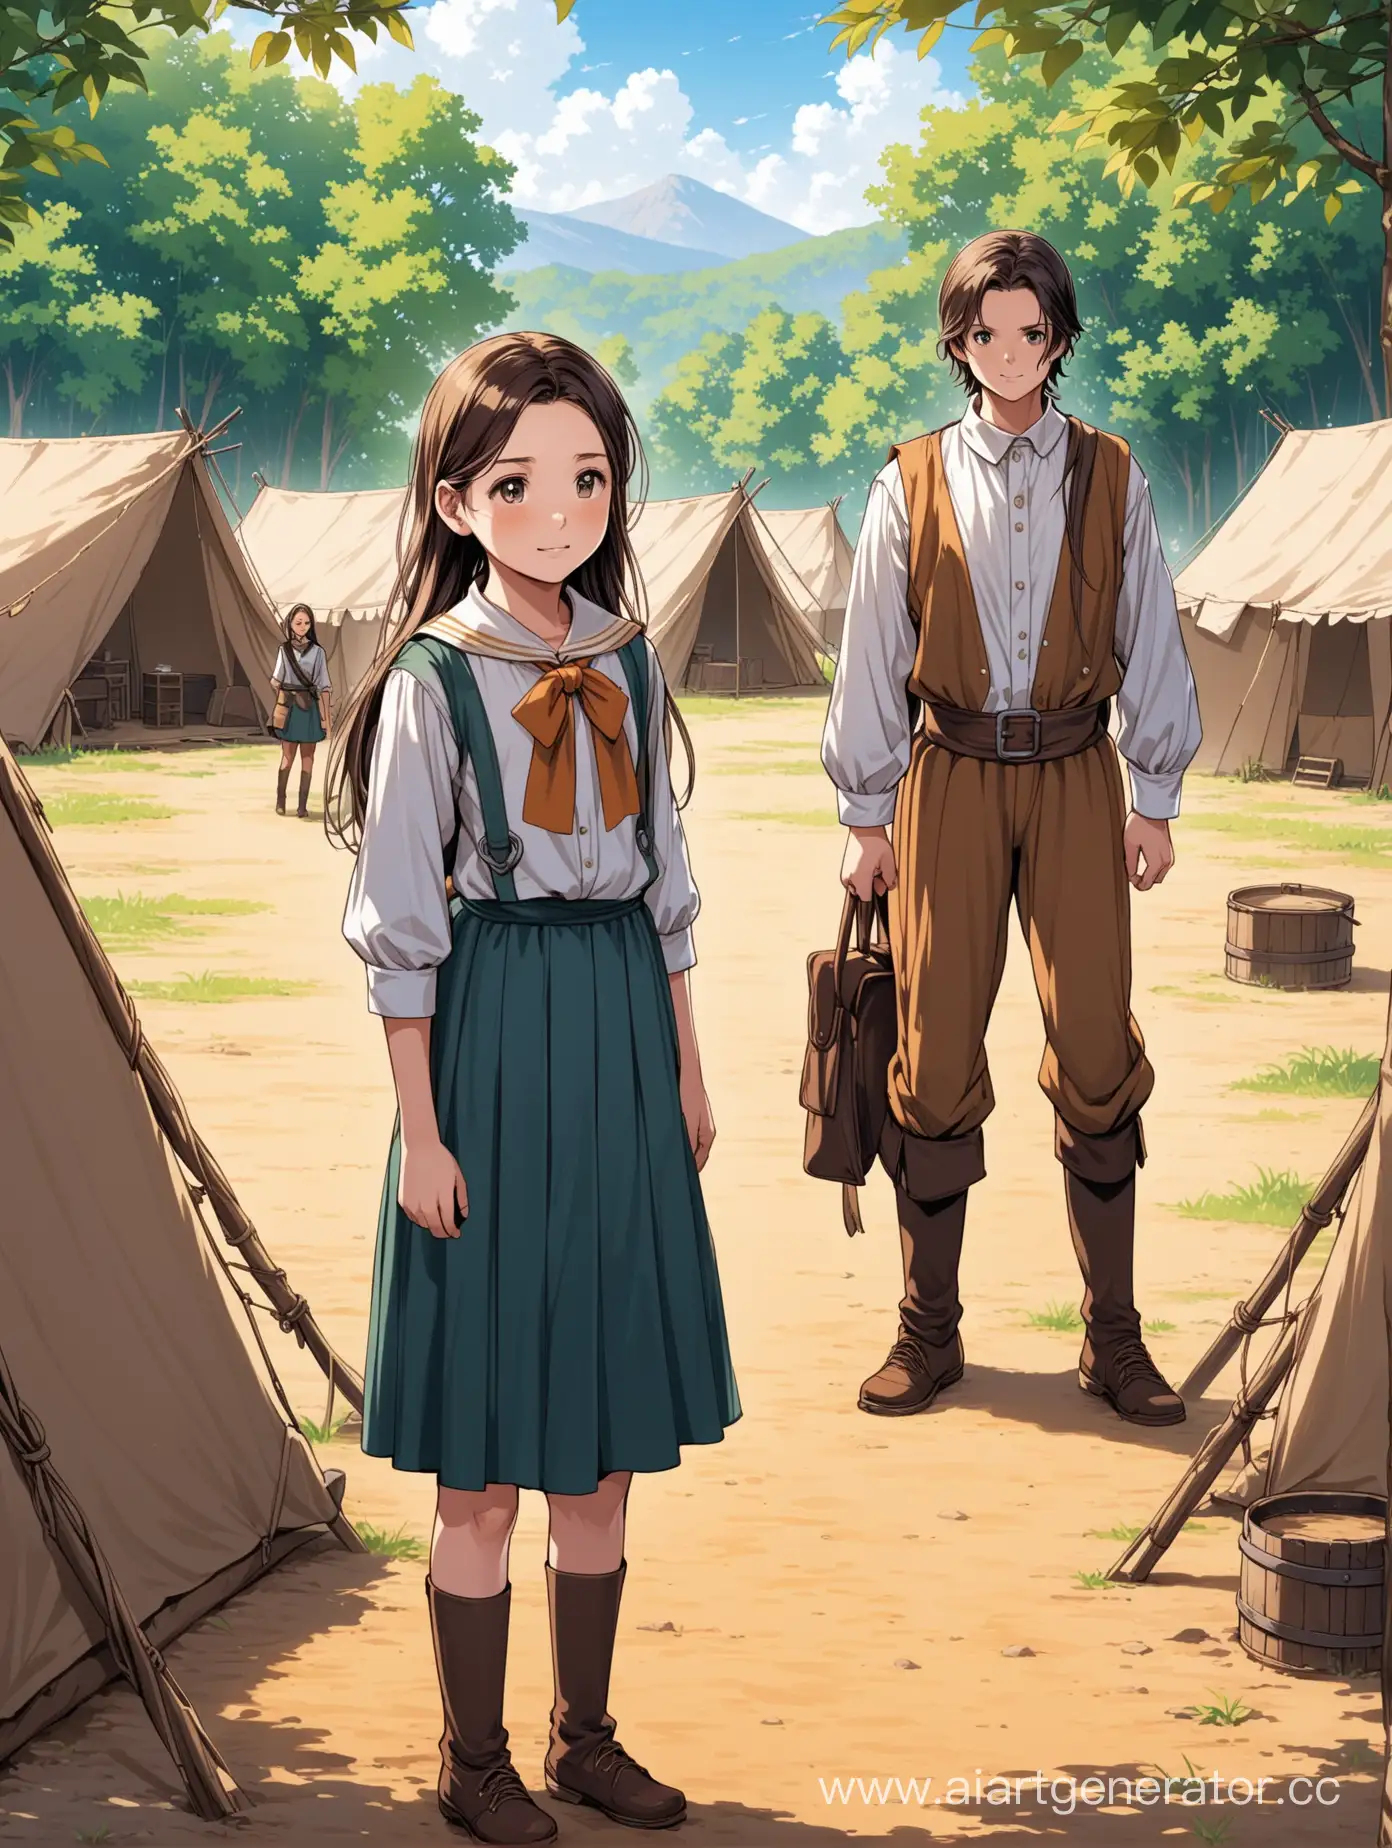 Teenage-Girl-in-Pioneer-Uniform-at-Campsite-with-BonditeLooking-Companion